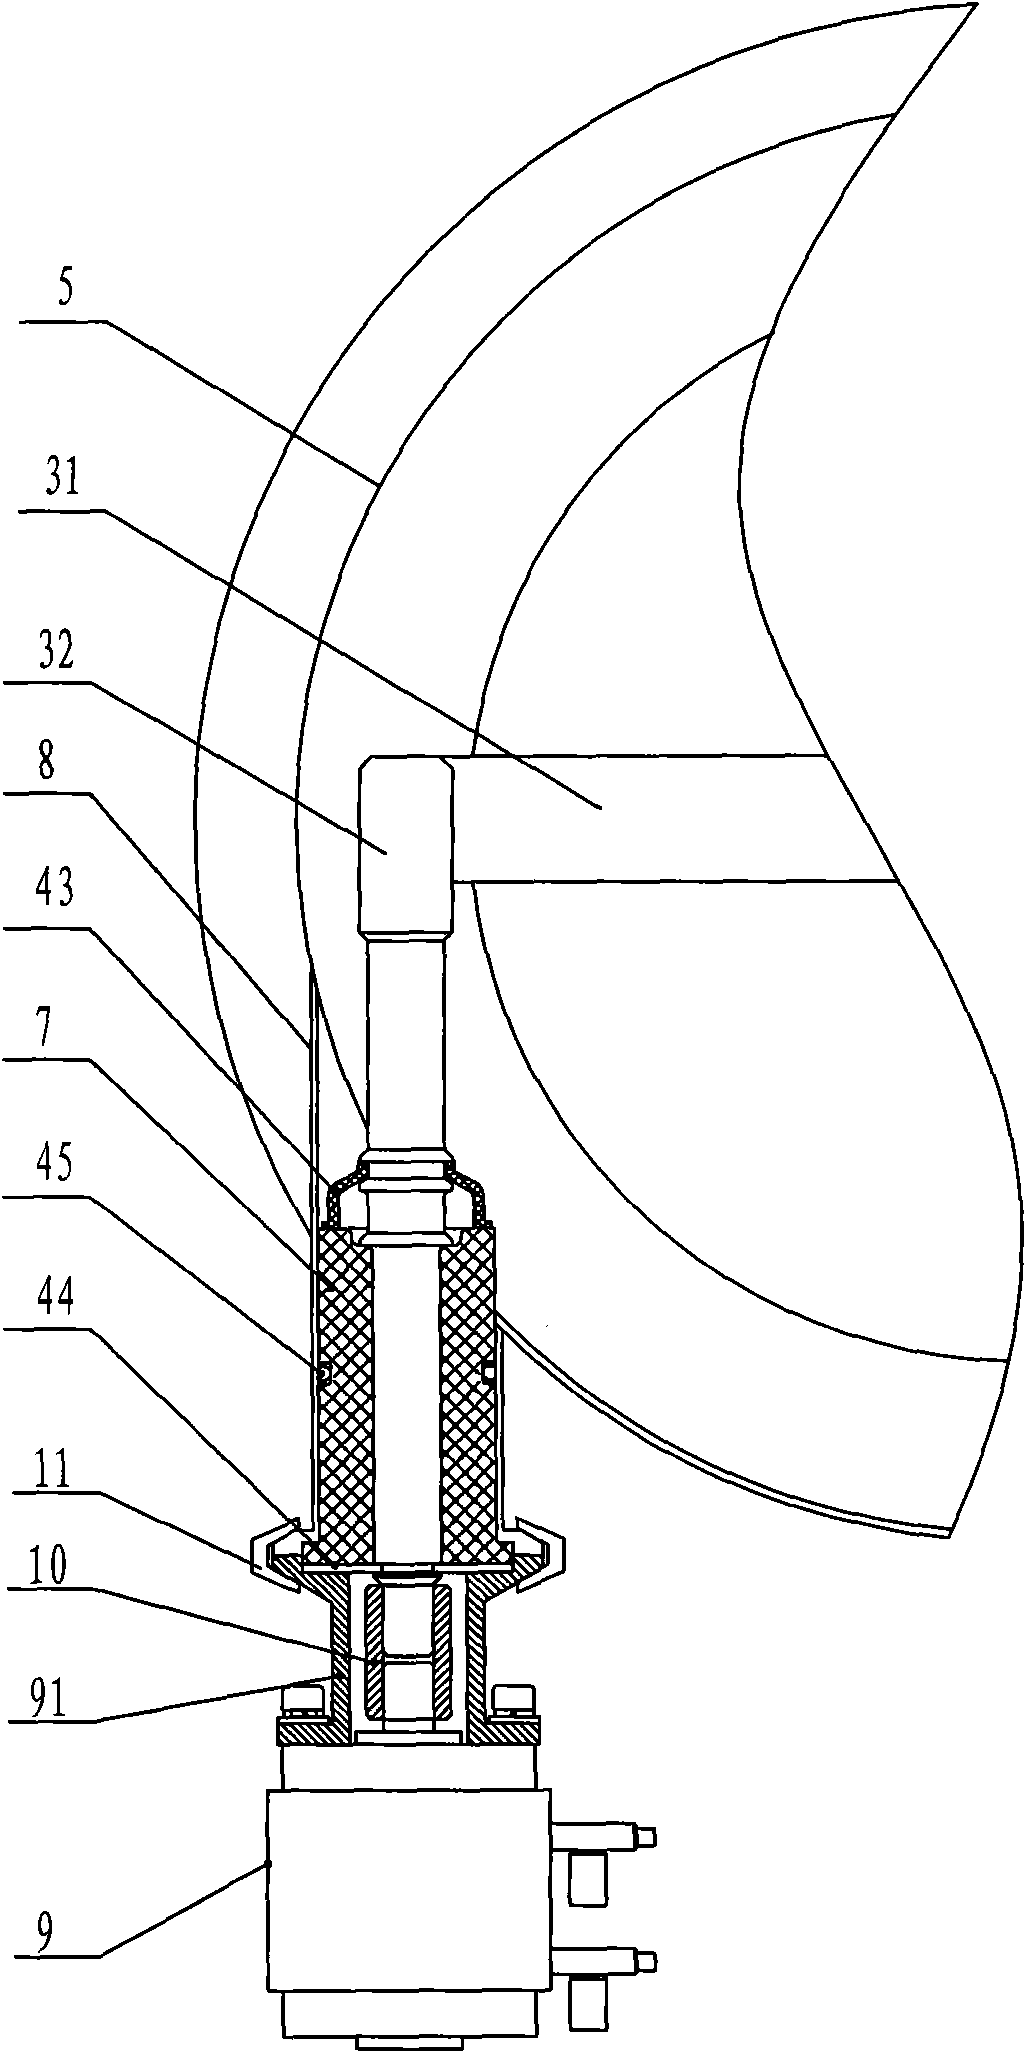 Discharge gate mechanism